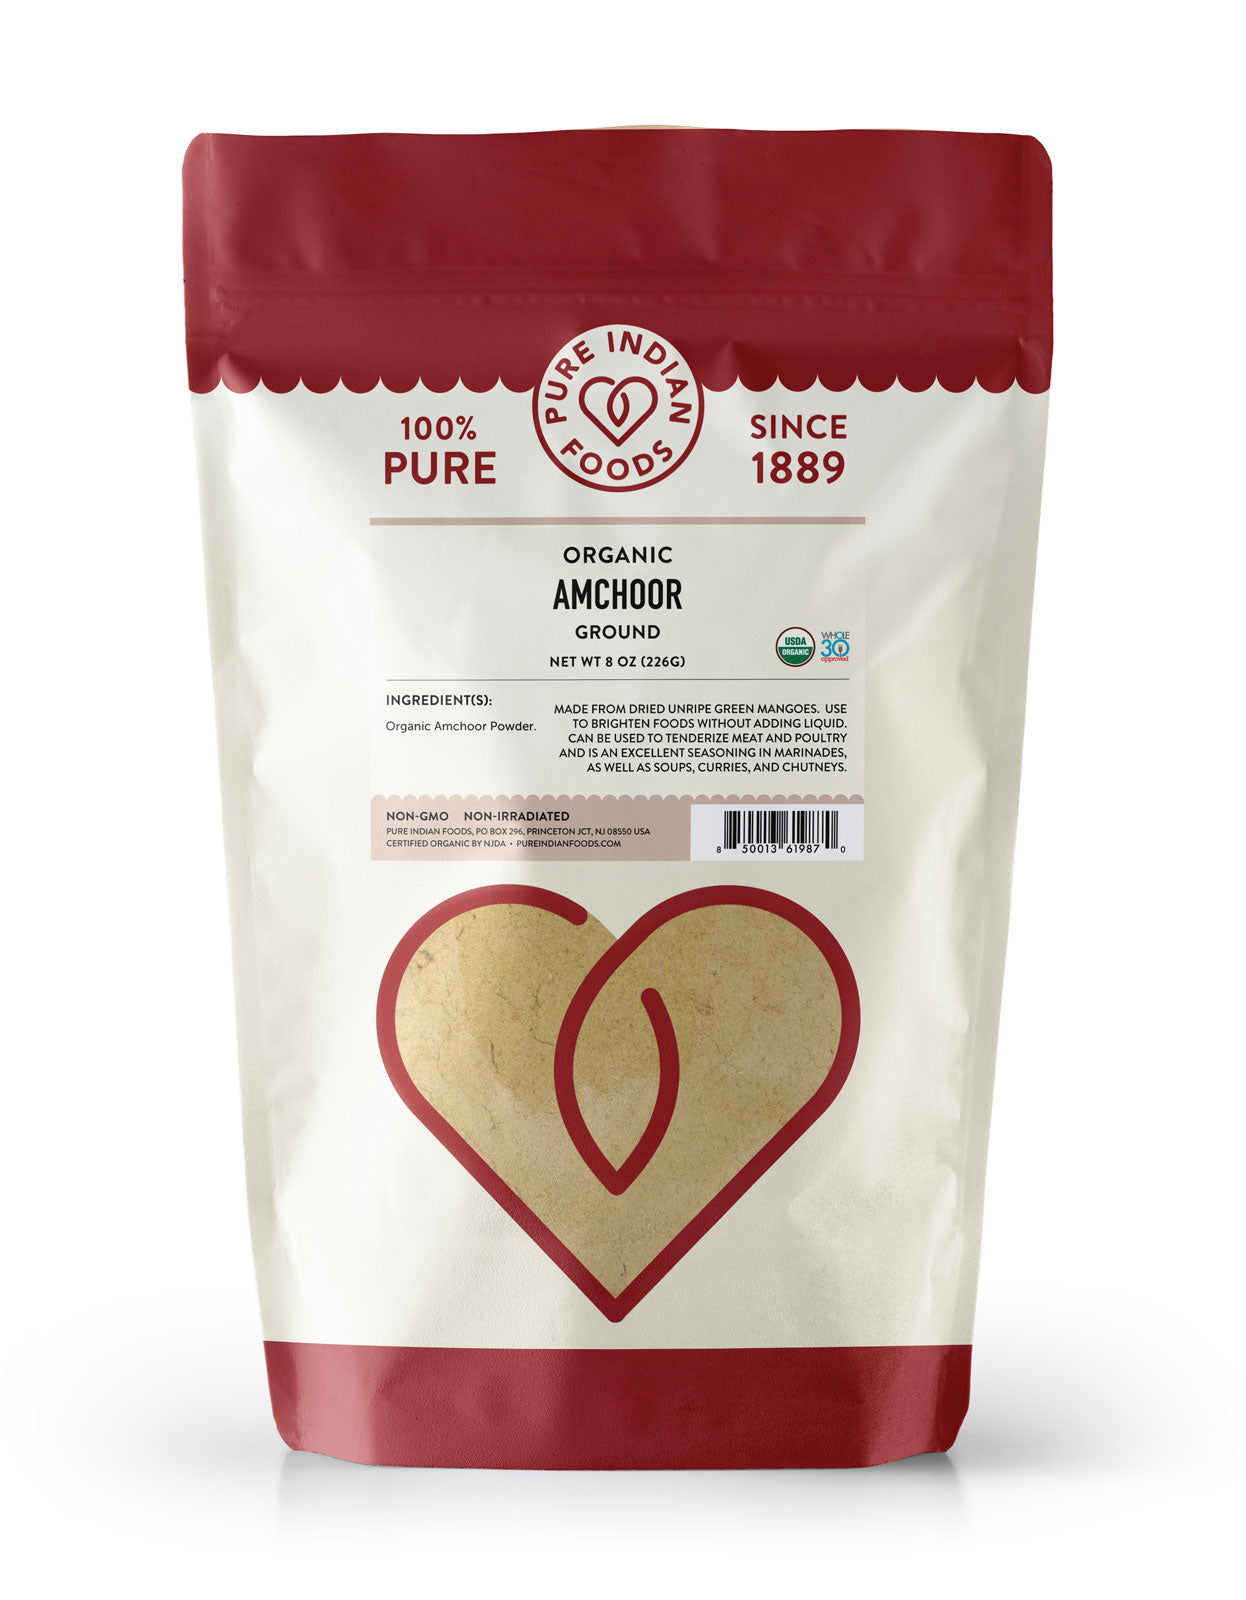 Amchoor Powder, Certified Organic